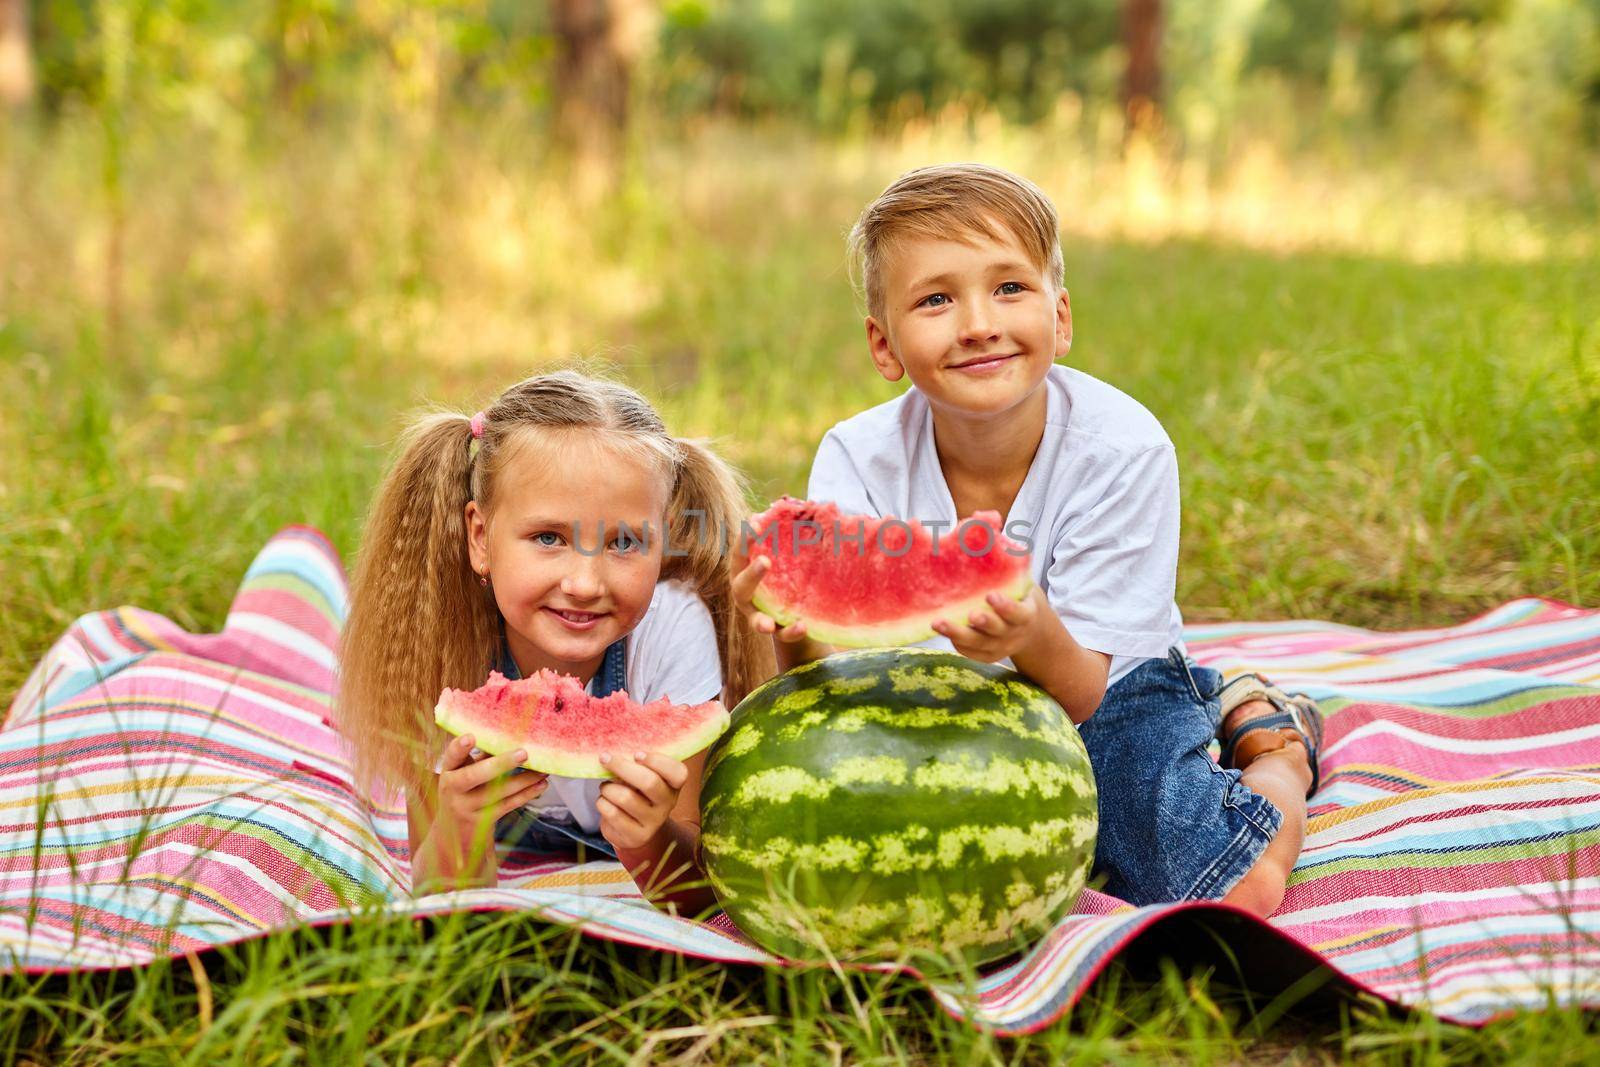 Kids eating watermelon in the park. by InnaVlasova